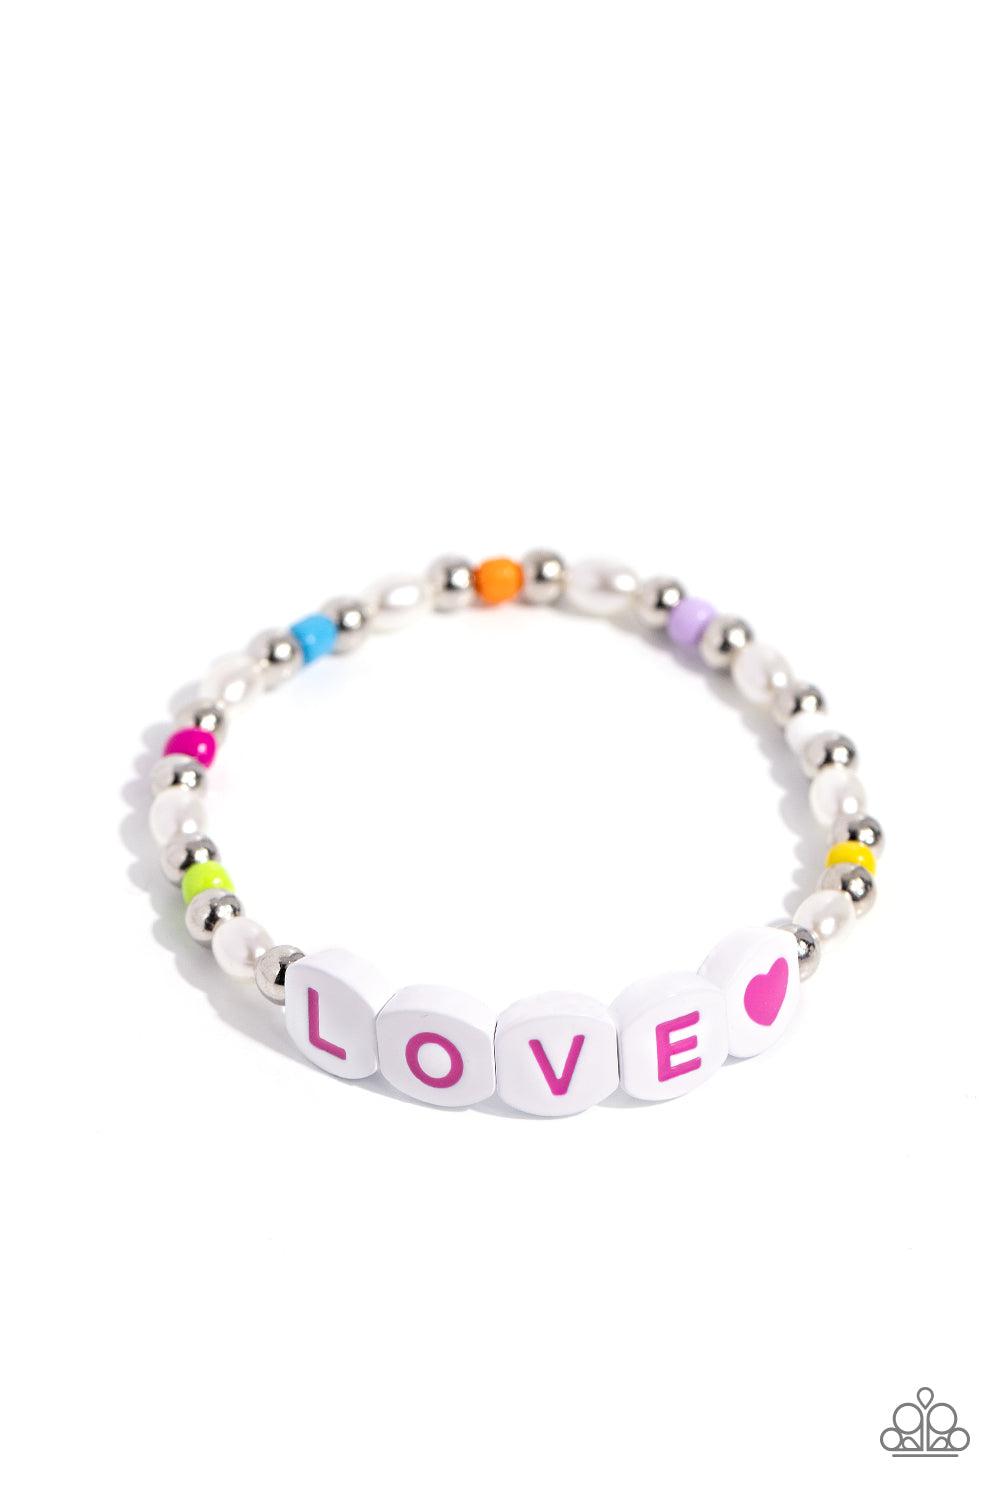 Love Language Multi Inspirational Bracelet - Paparazzi Accessories- lightbox - CarasShop.com - $5 Jewelry by Cara Jewels